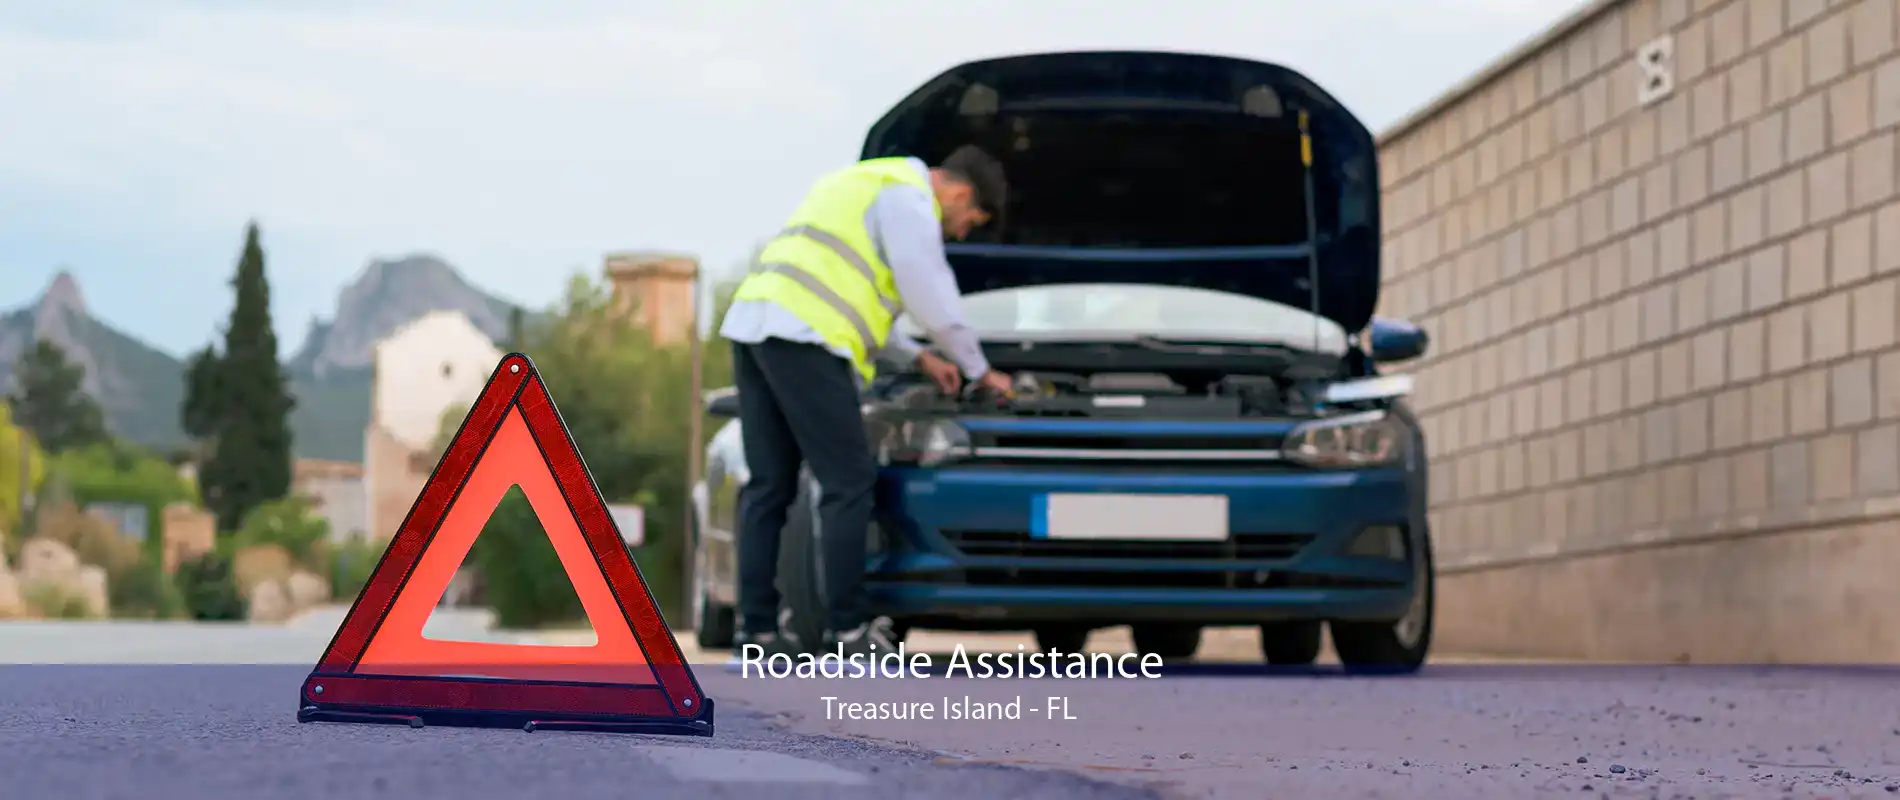 Roadside Assistance Treasure Island - FL